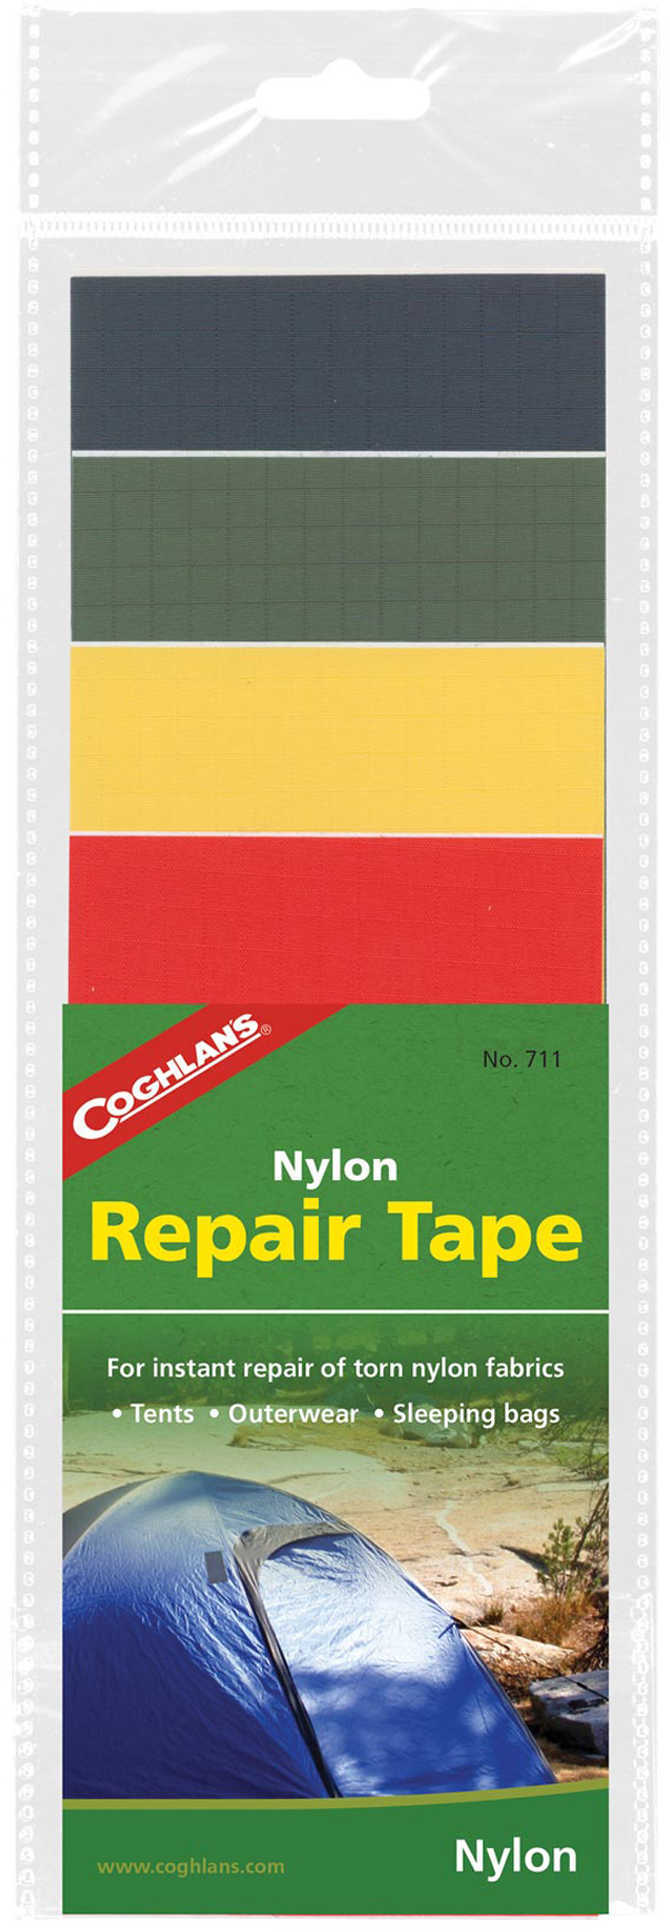 Coghlans Nylon Repair Tape 711